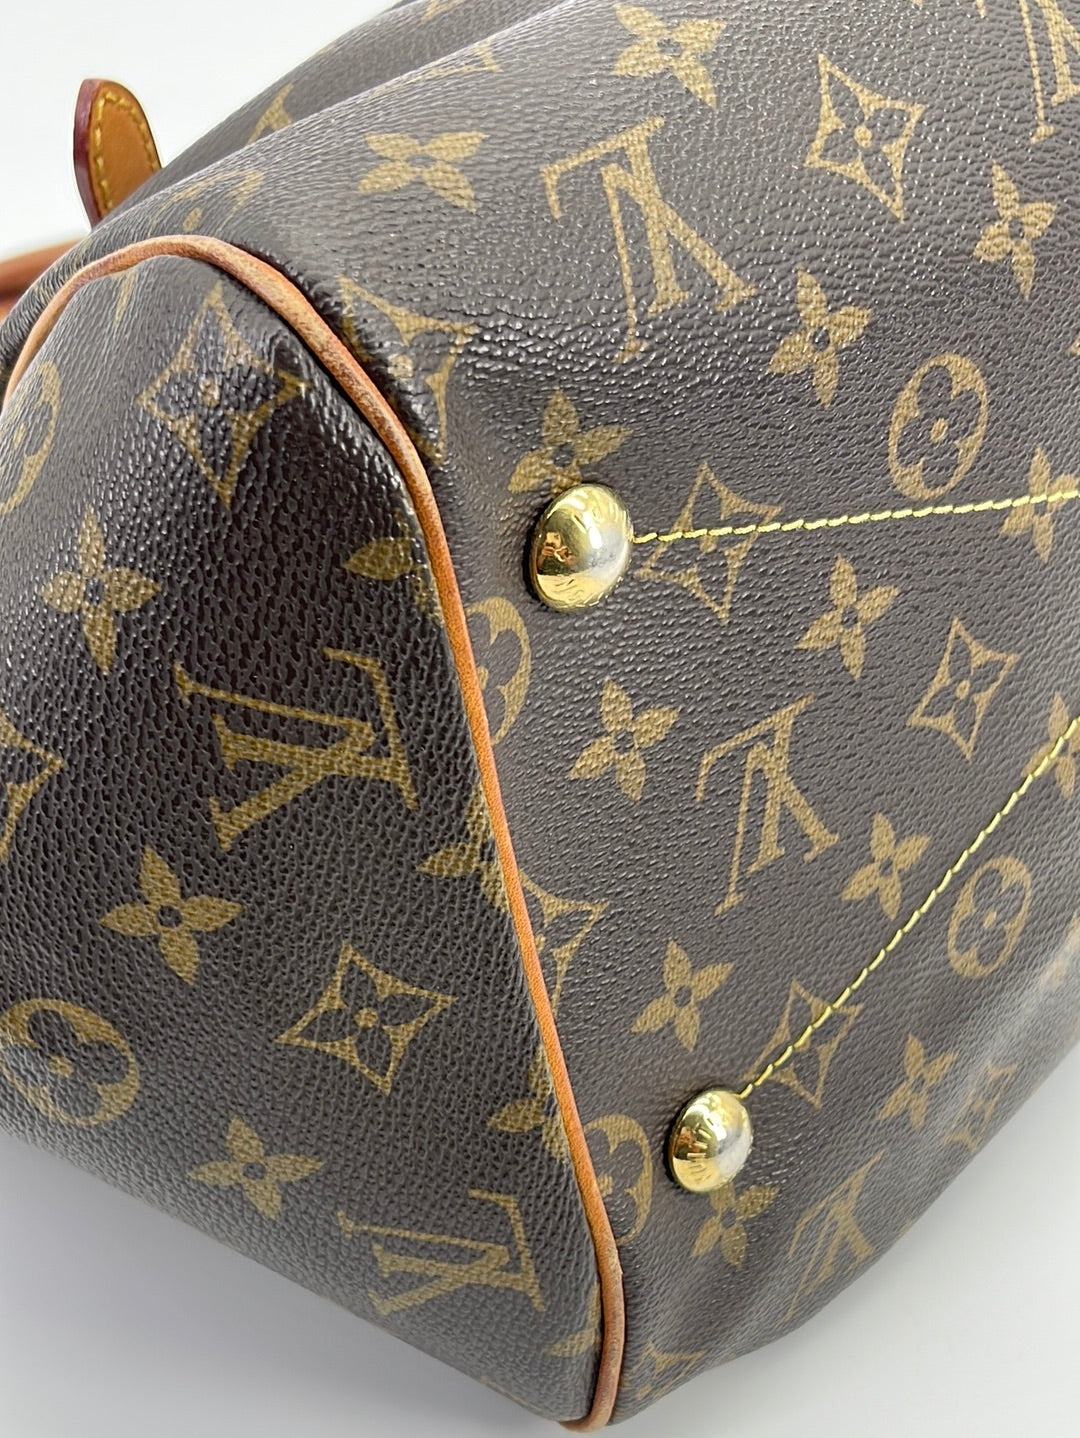 Authentic Louis Vuitton Tivoli Handbag for Sale in Issaquah, WA